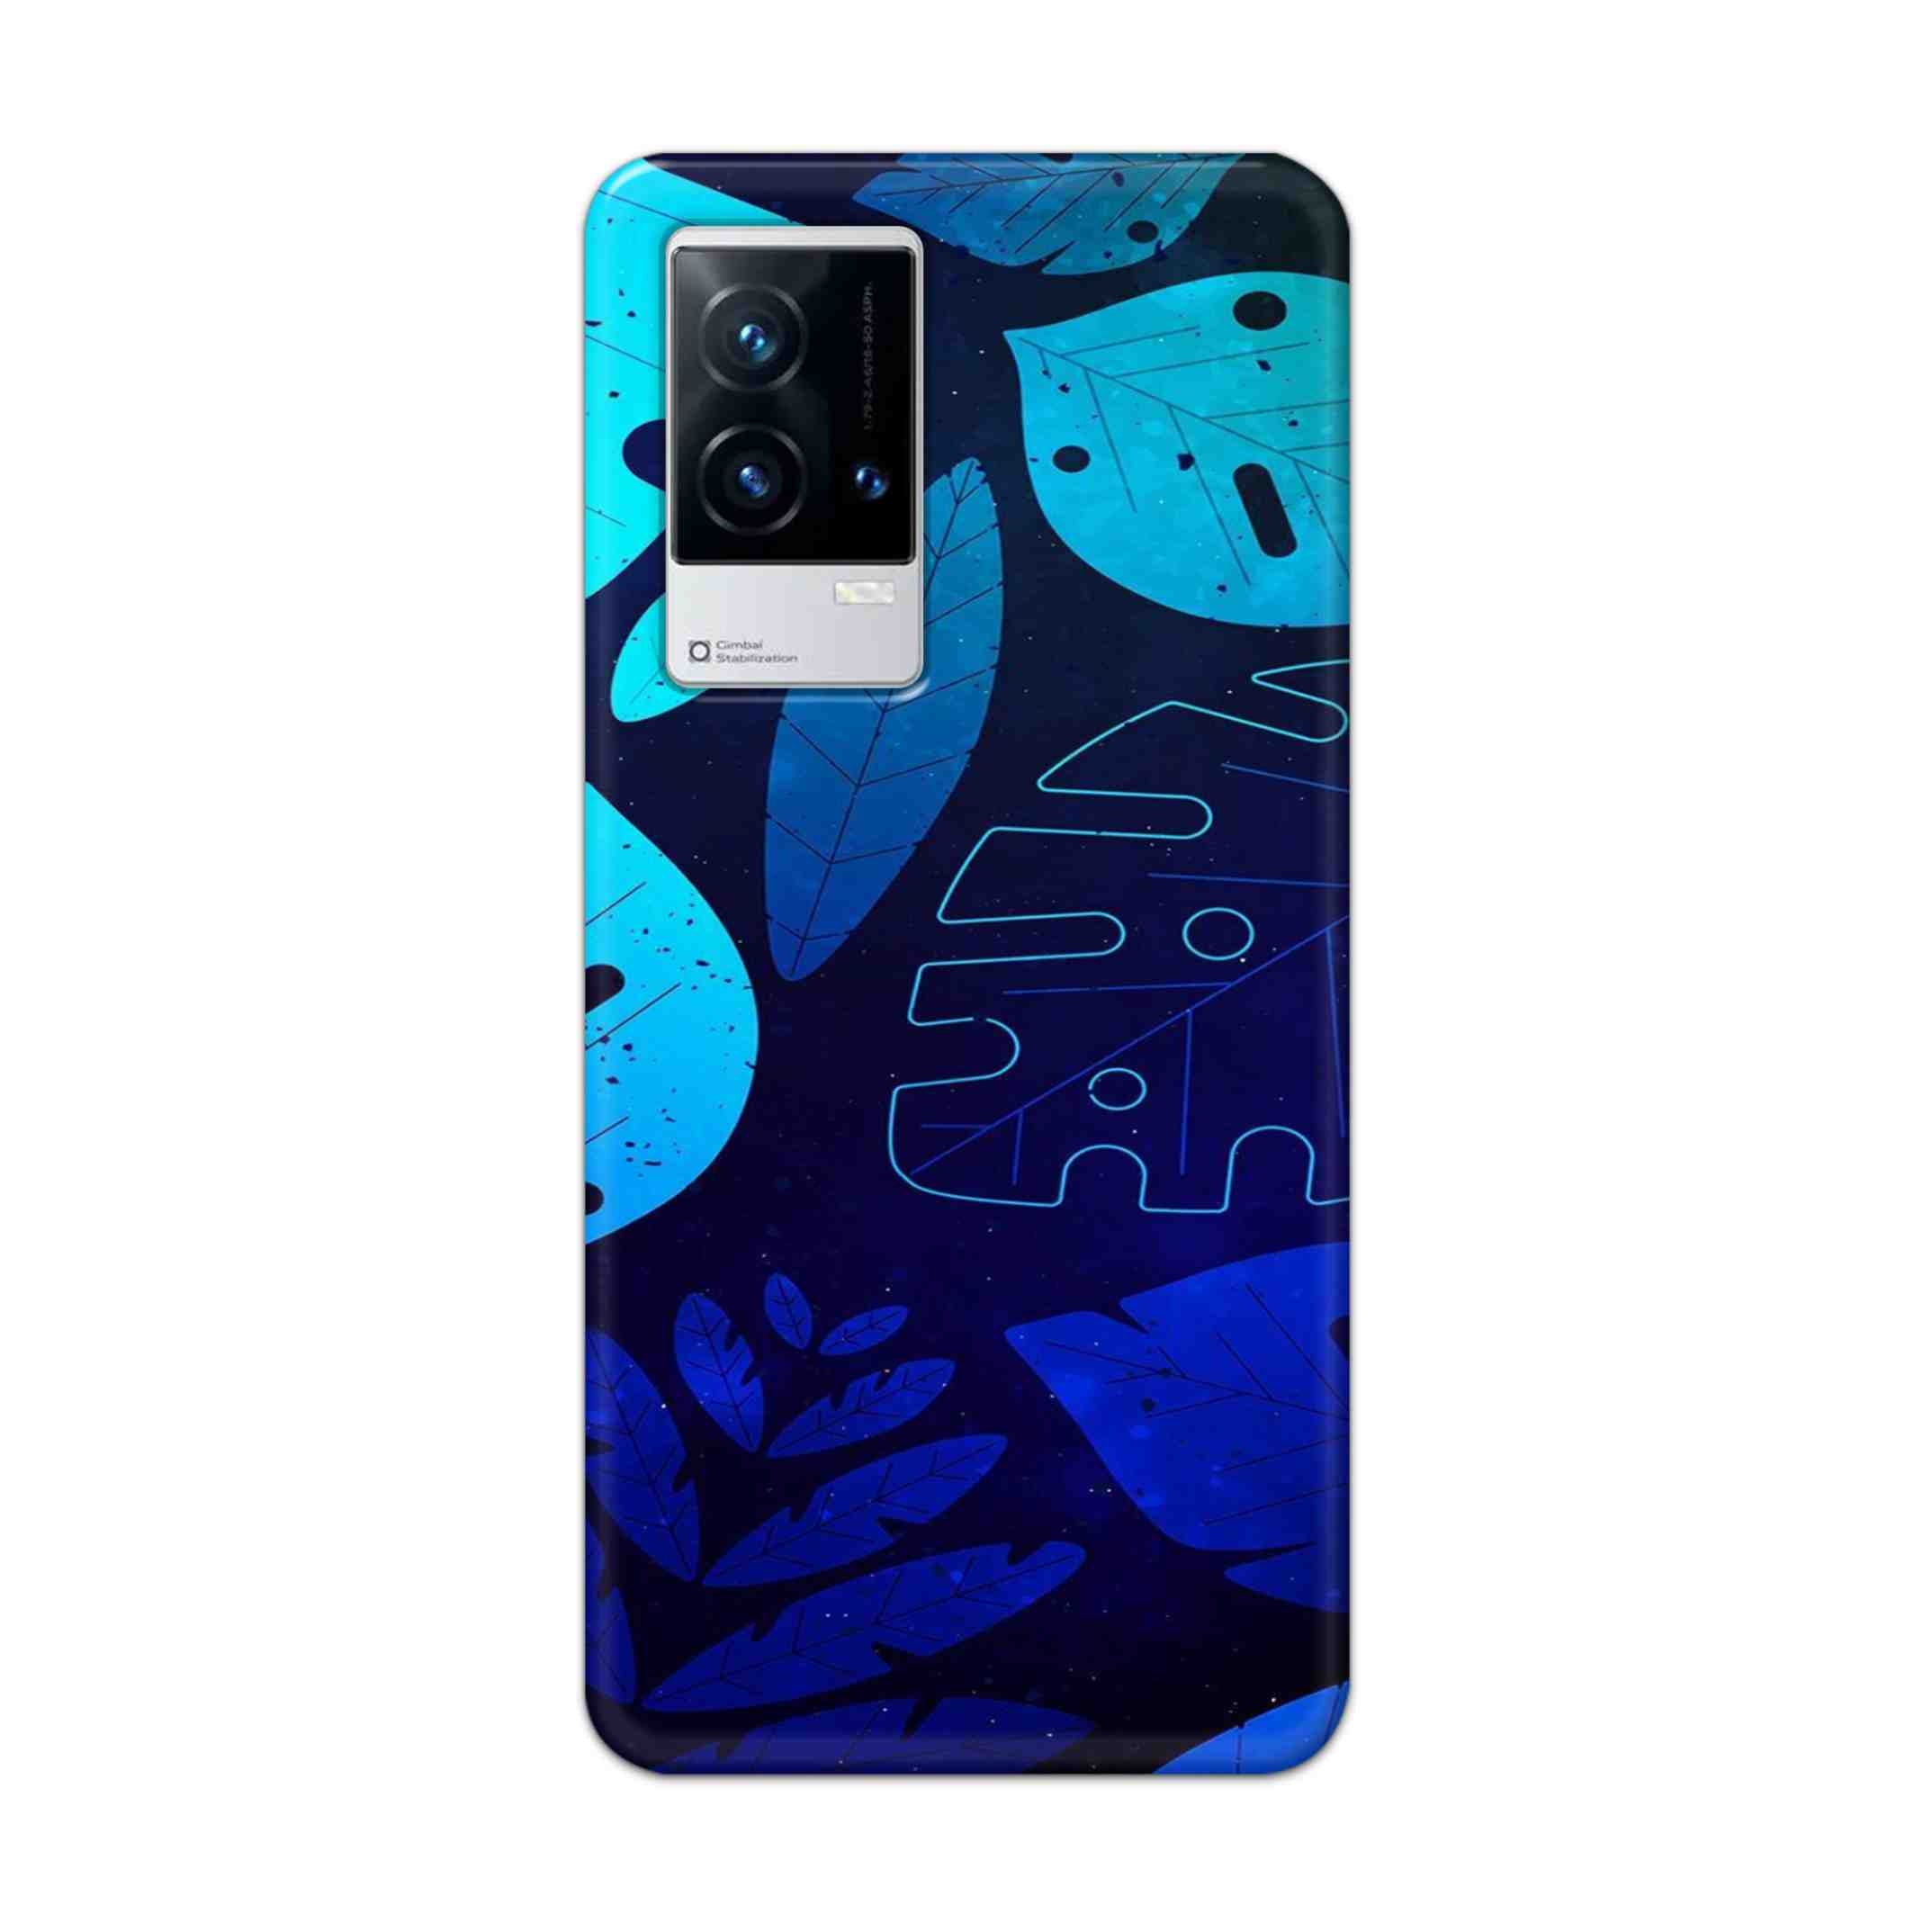 Buy Neon Leaf Hard Back Mobile Phone Case Cover For Vivo iQOO 9 5G Online